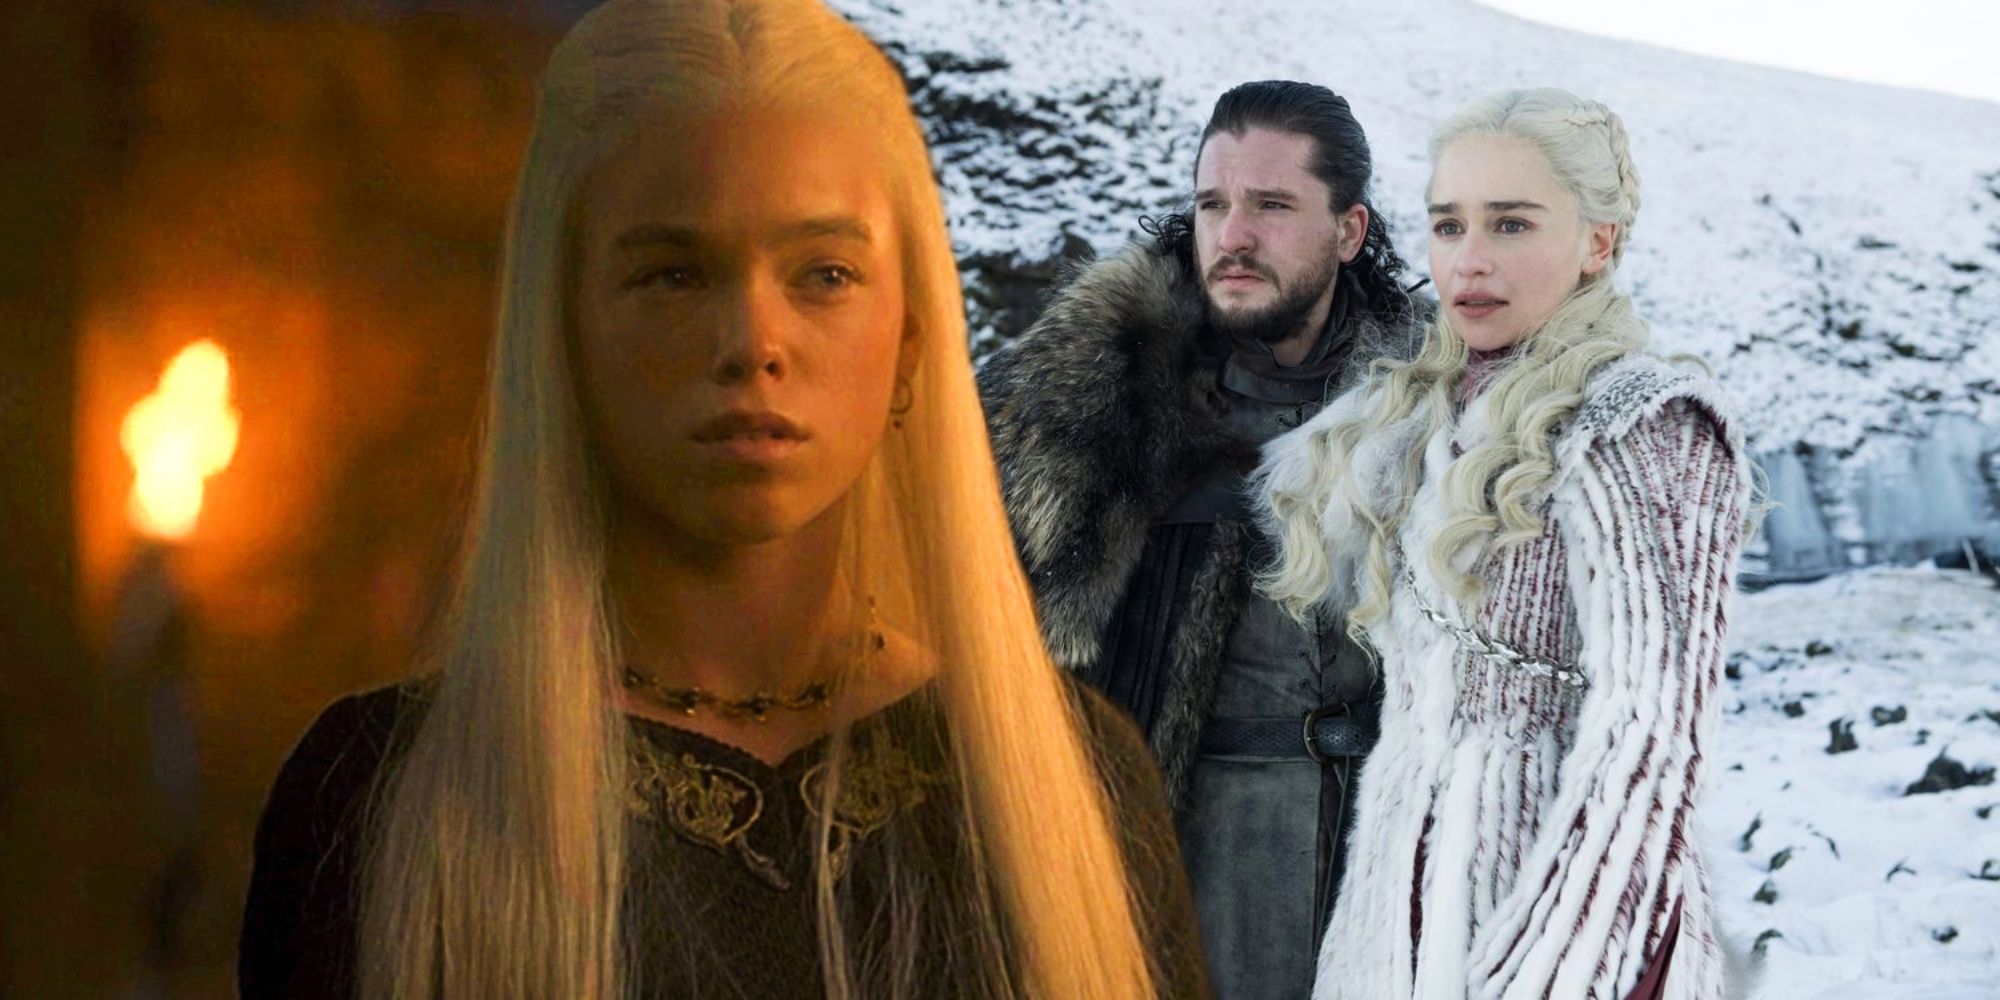 HOTD's Young Rhaenyra Targaryen with GOT's Jon Snow and Daenerys Targaryen